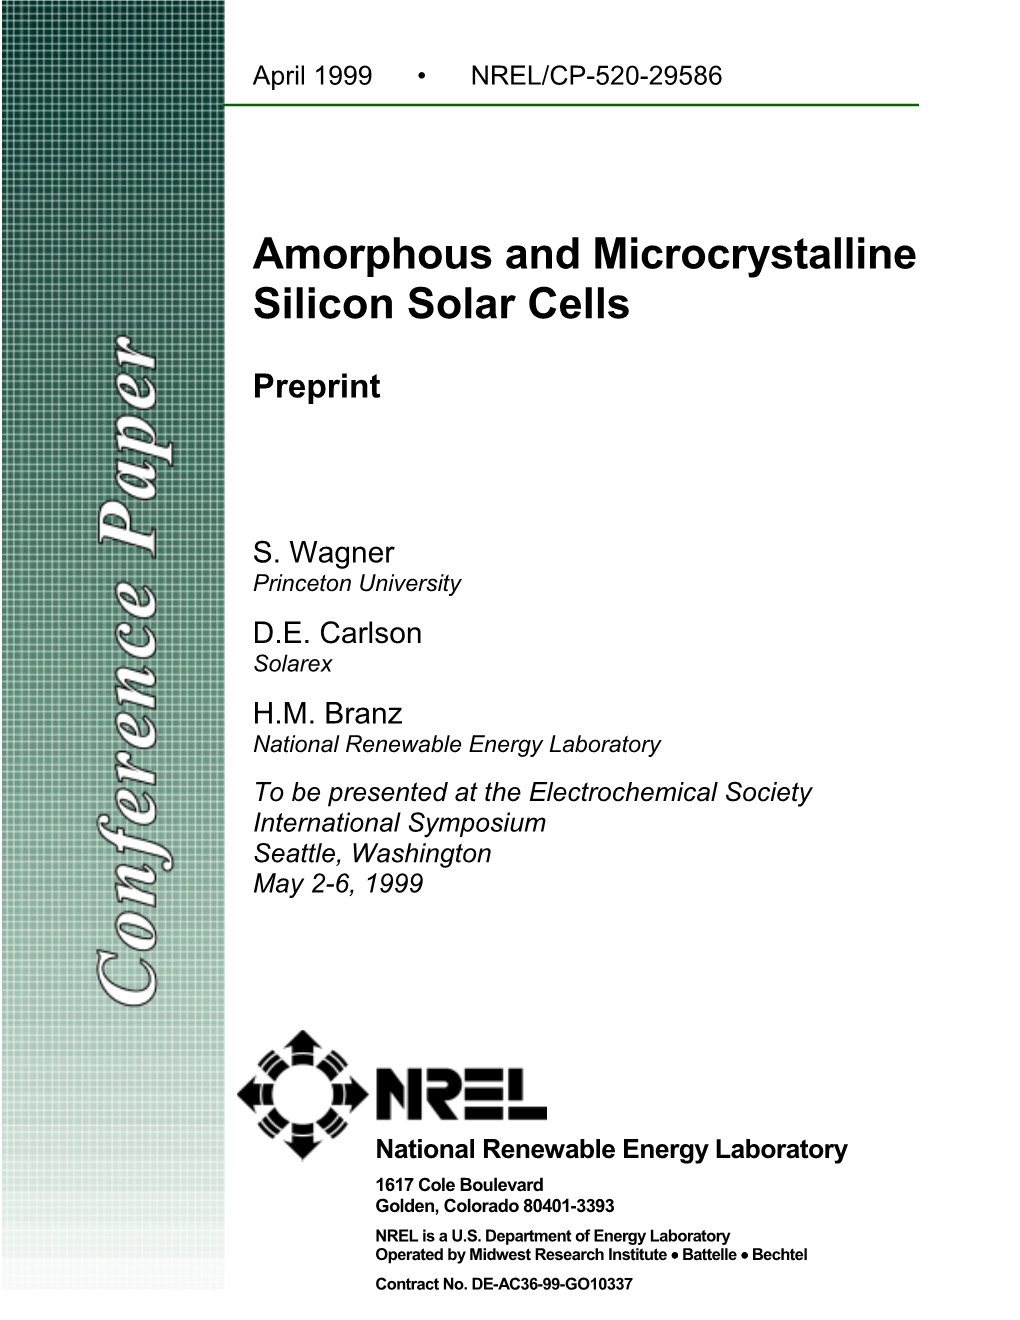 Amorphous and Microcrystalline Silicon Solar Cells: Preprint